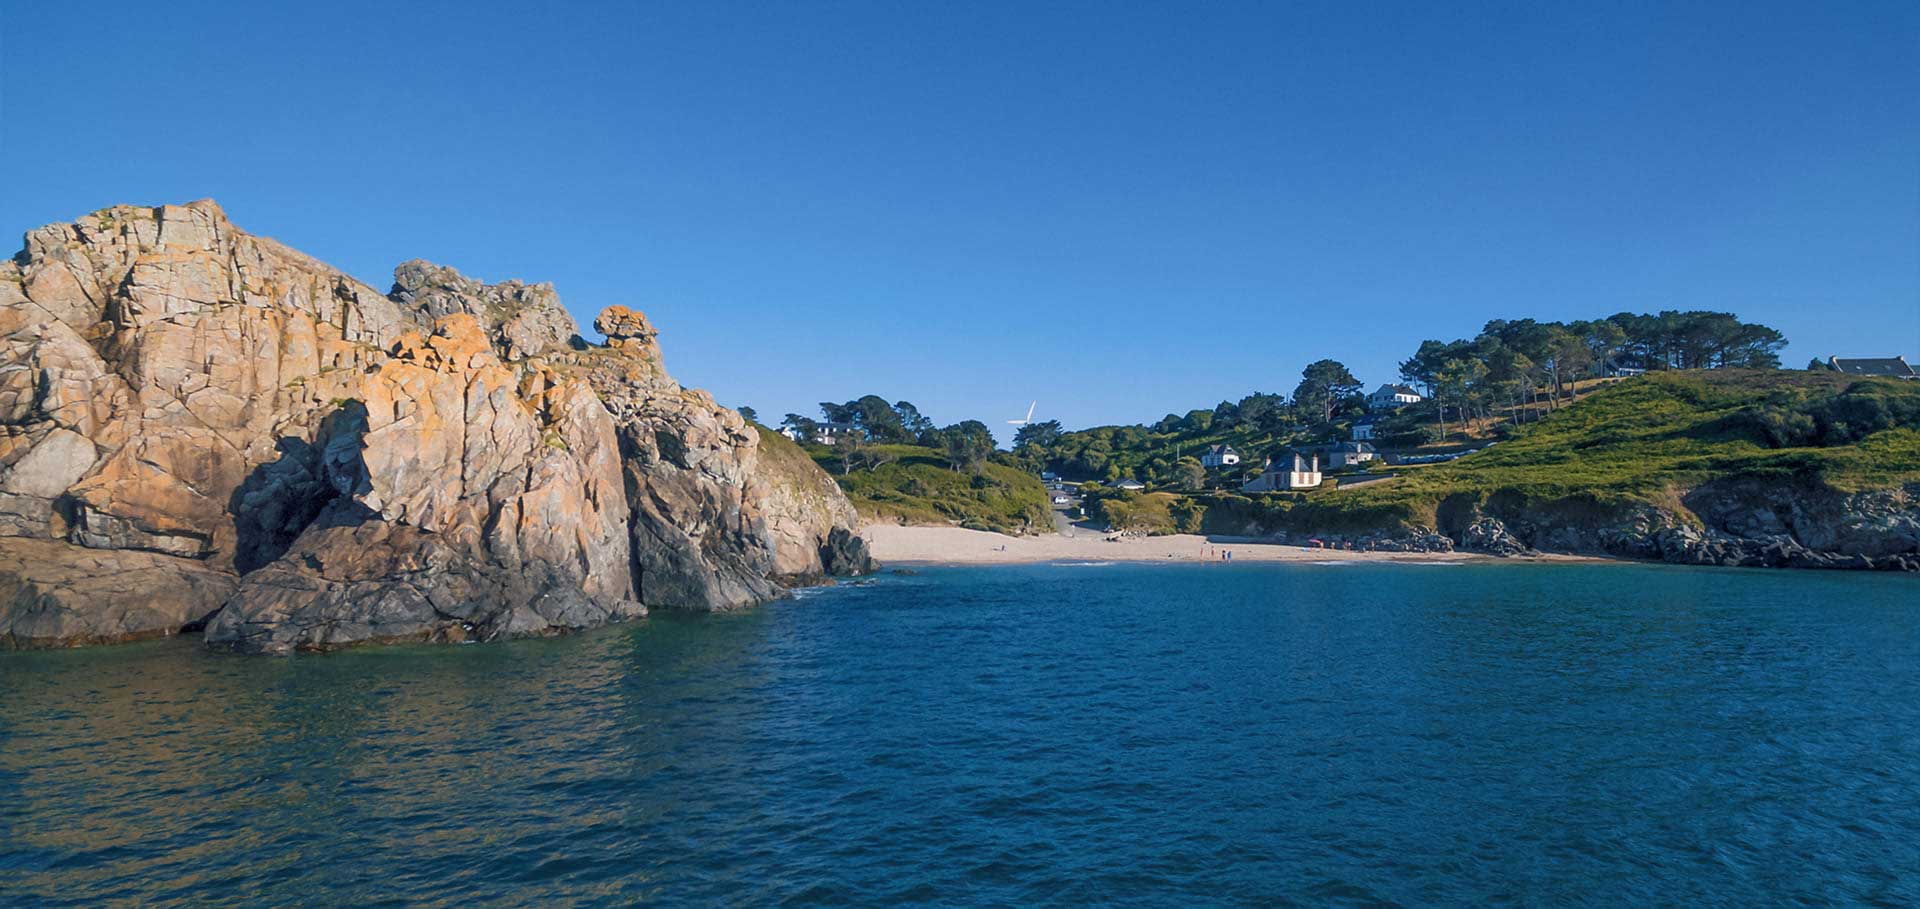 View of the Cap Sizun peninsula in Brittany